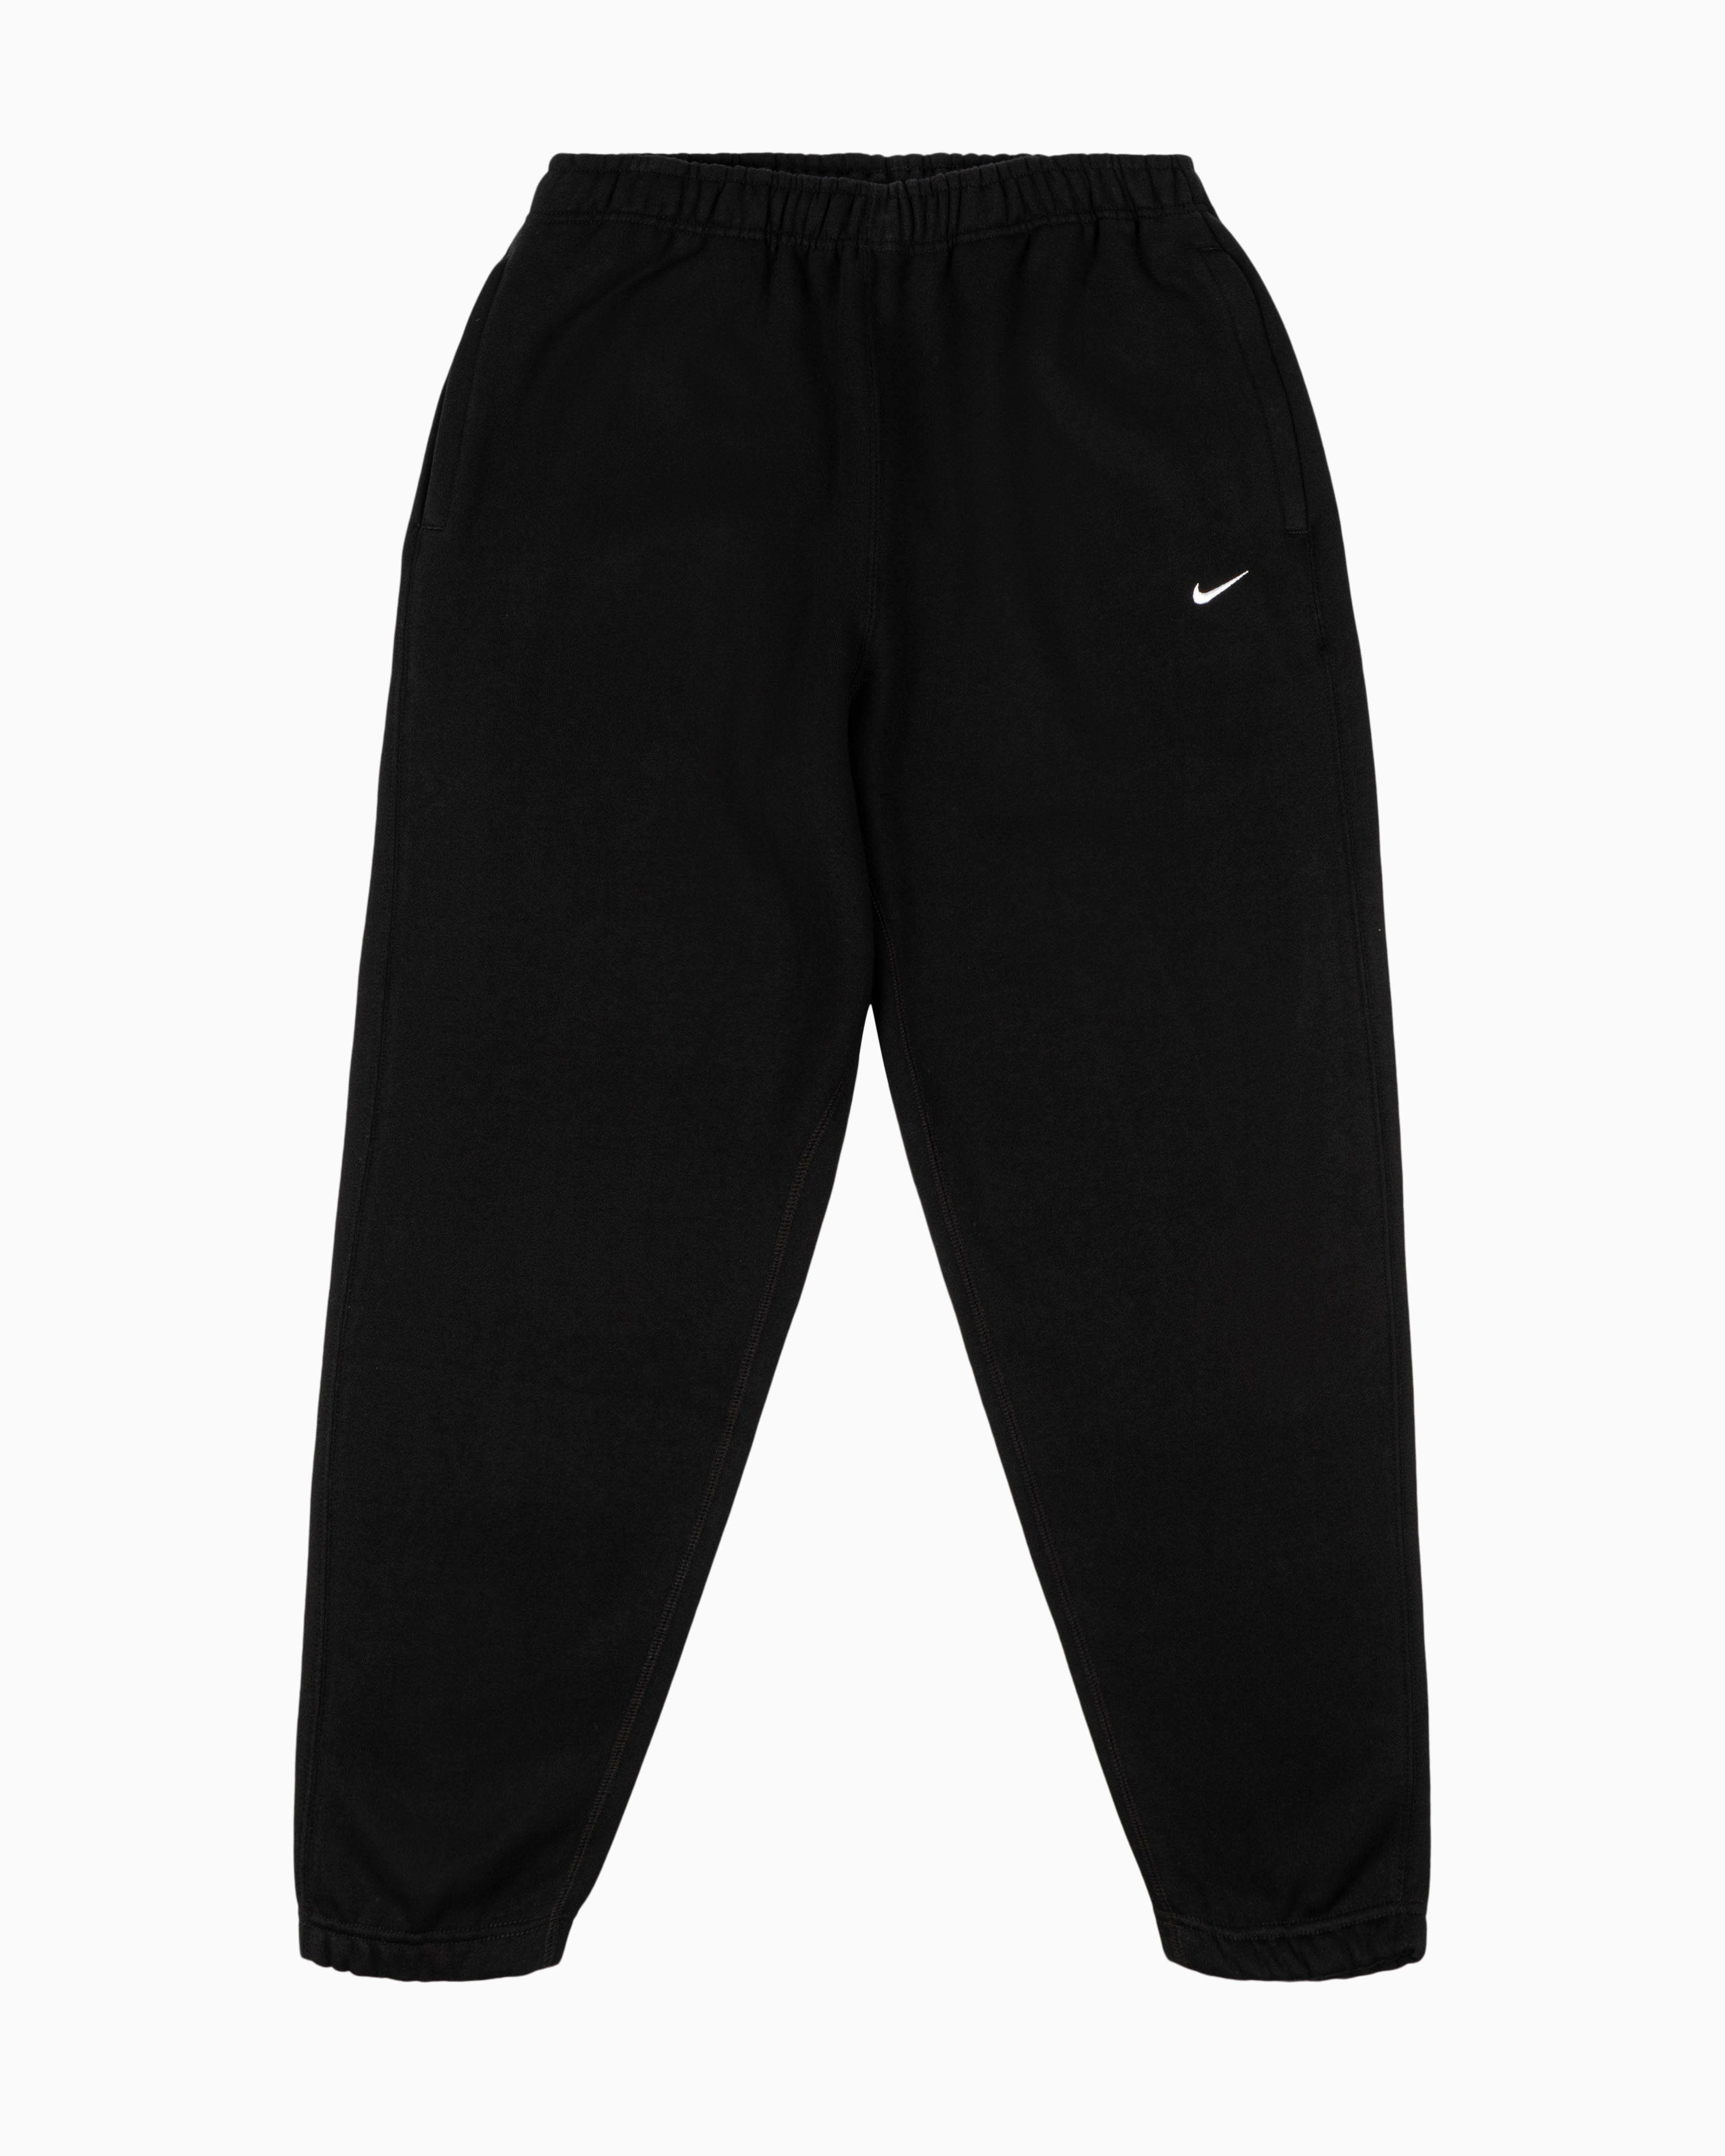 NRG Pant Fleece by Nike